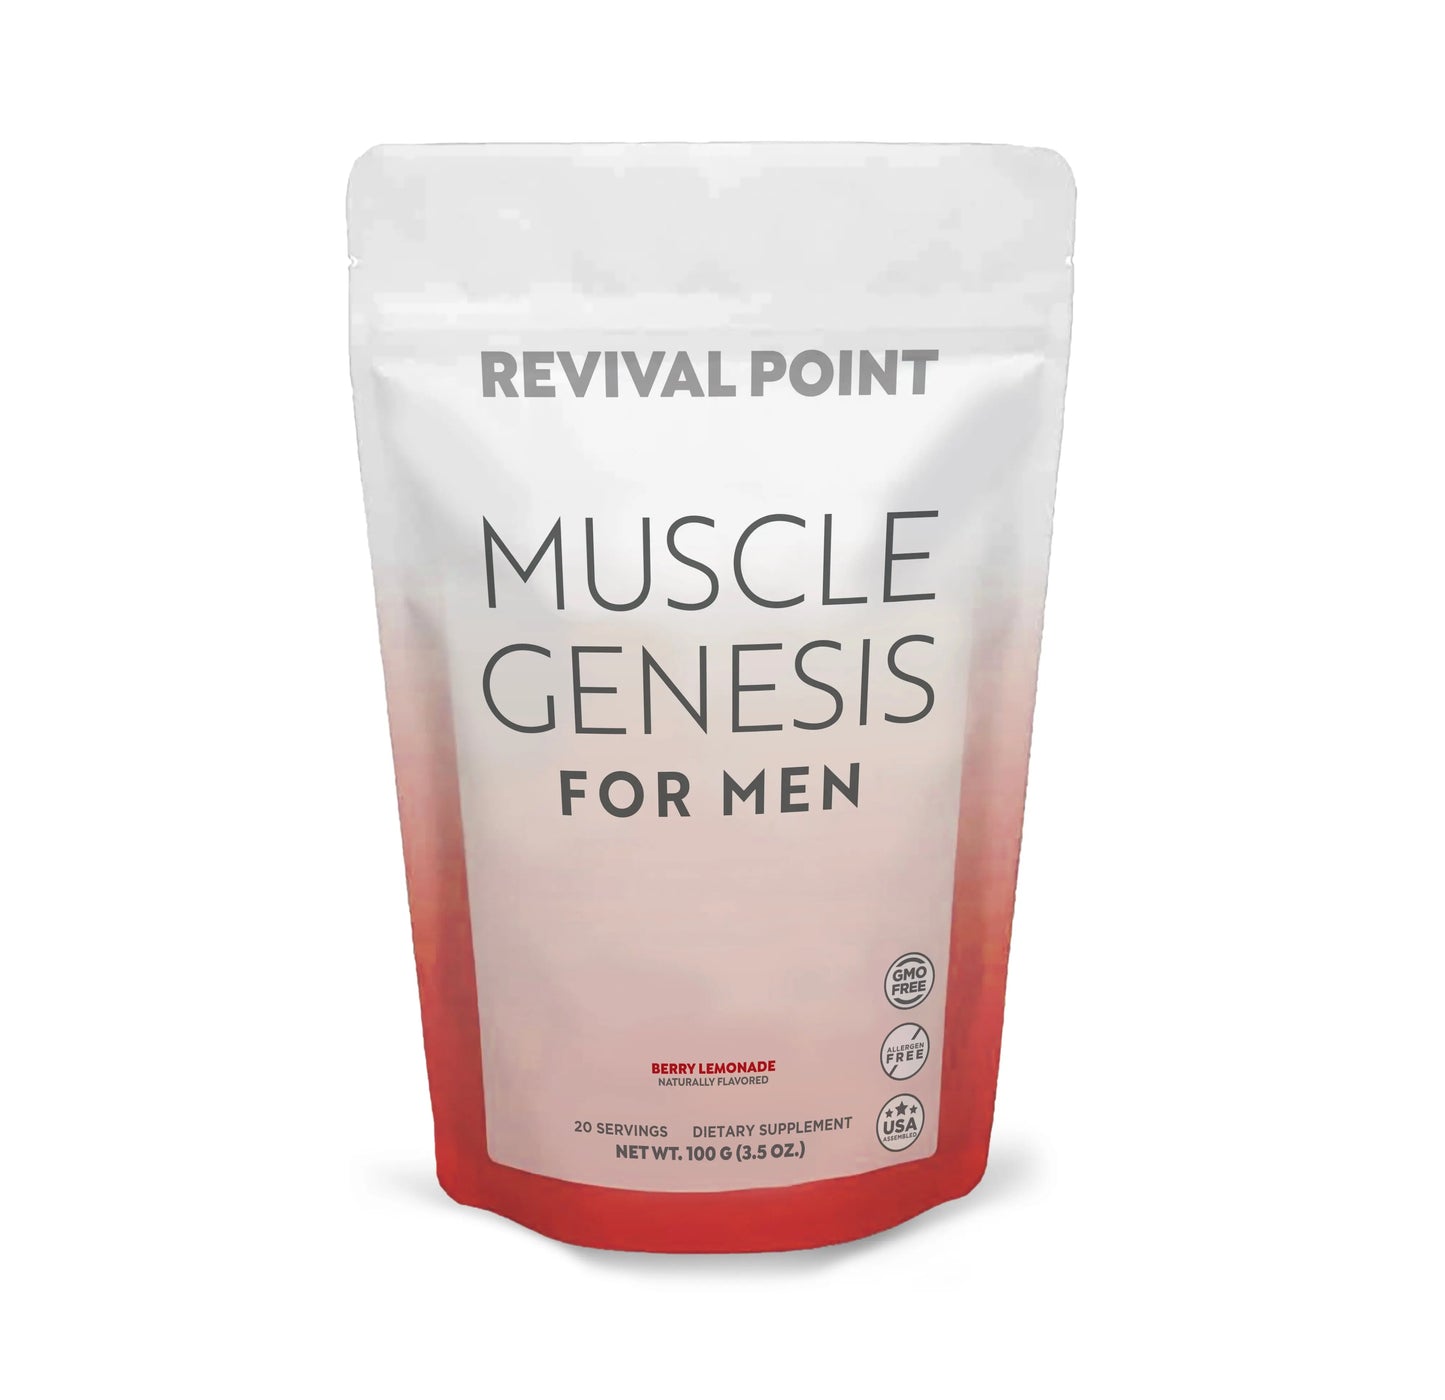 Muscle Genesis For Men HMB Supplement - revivalpoint